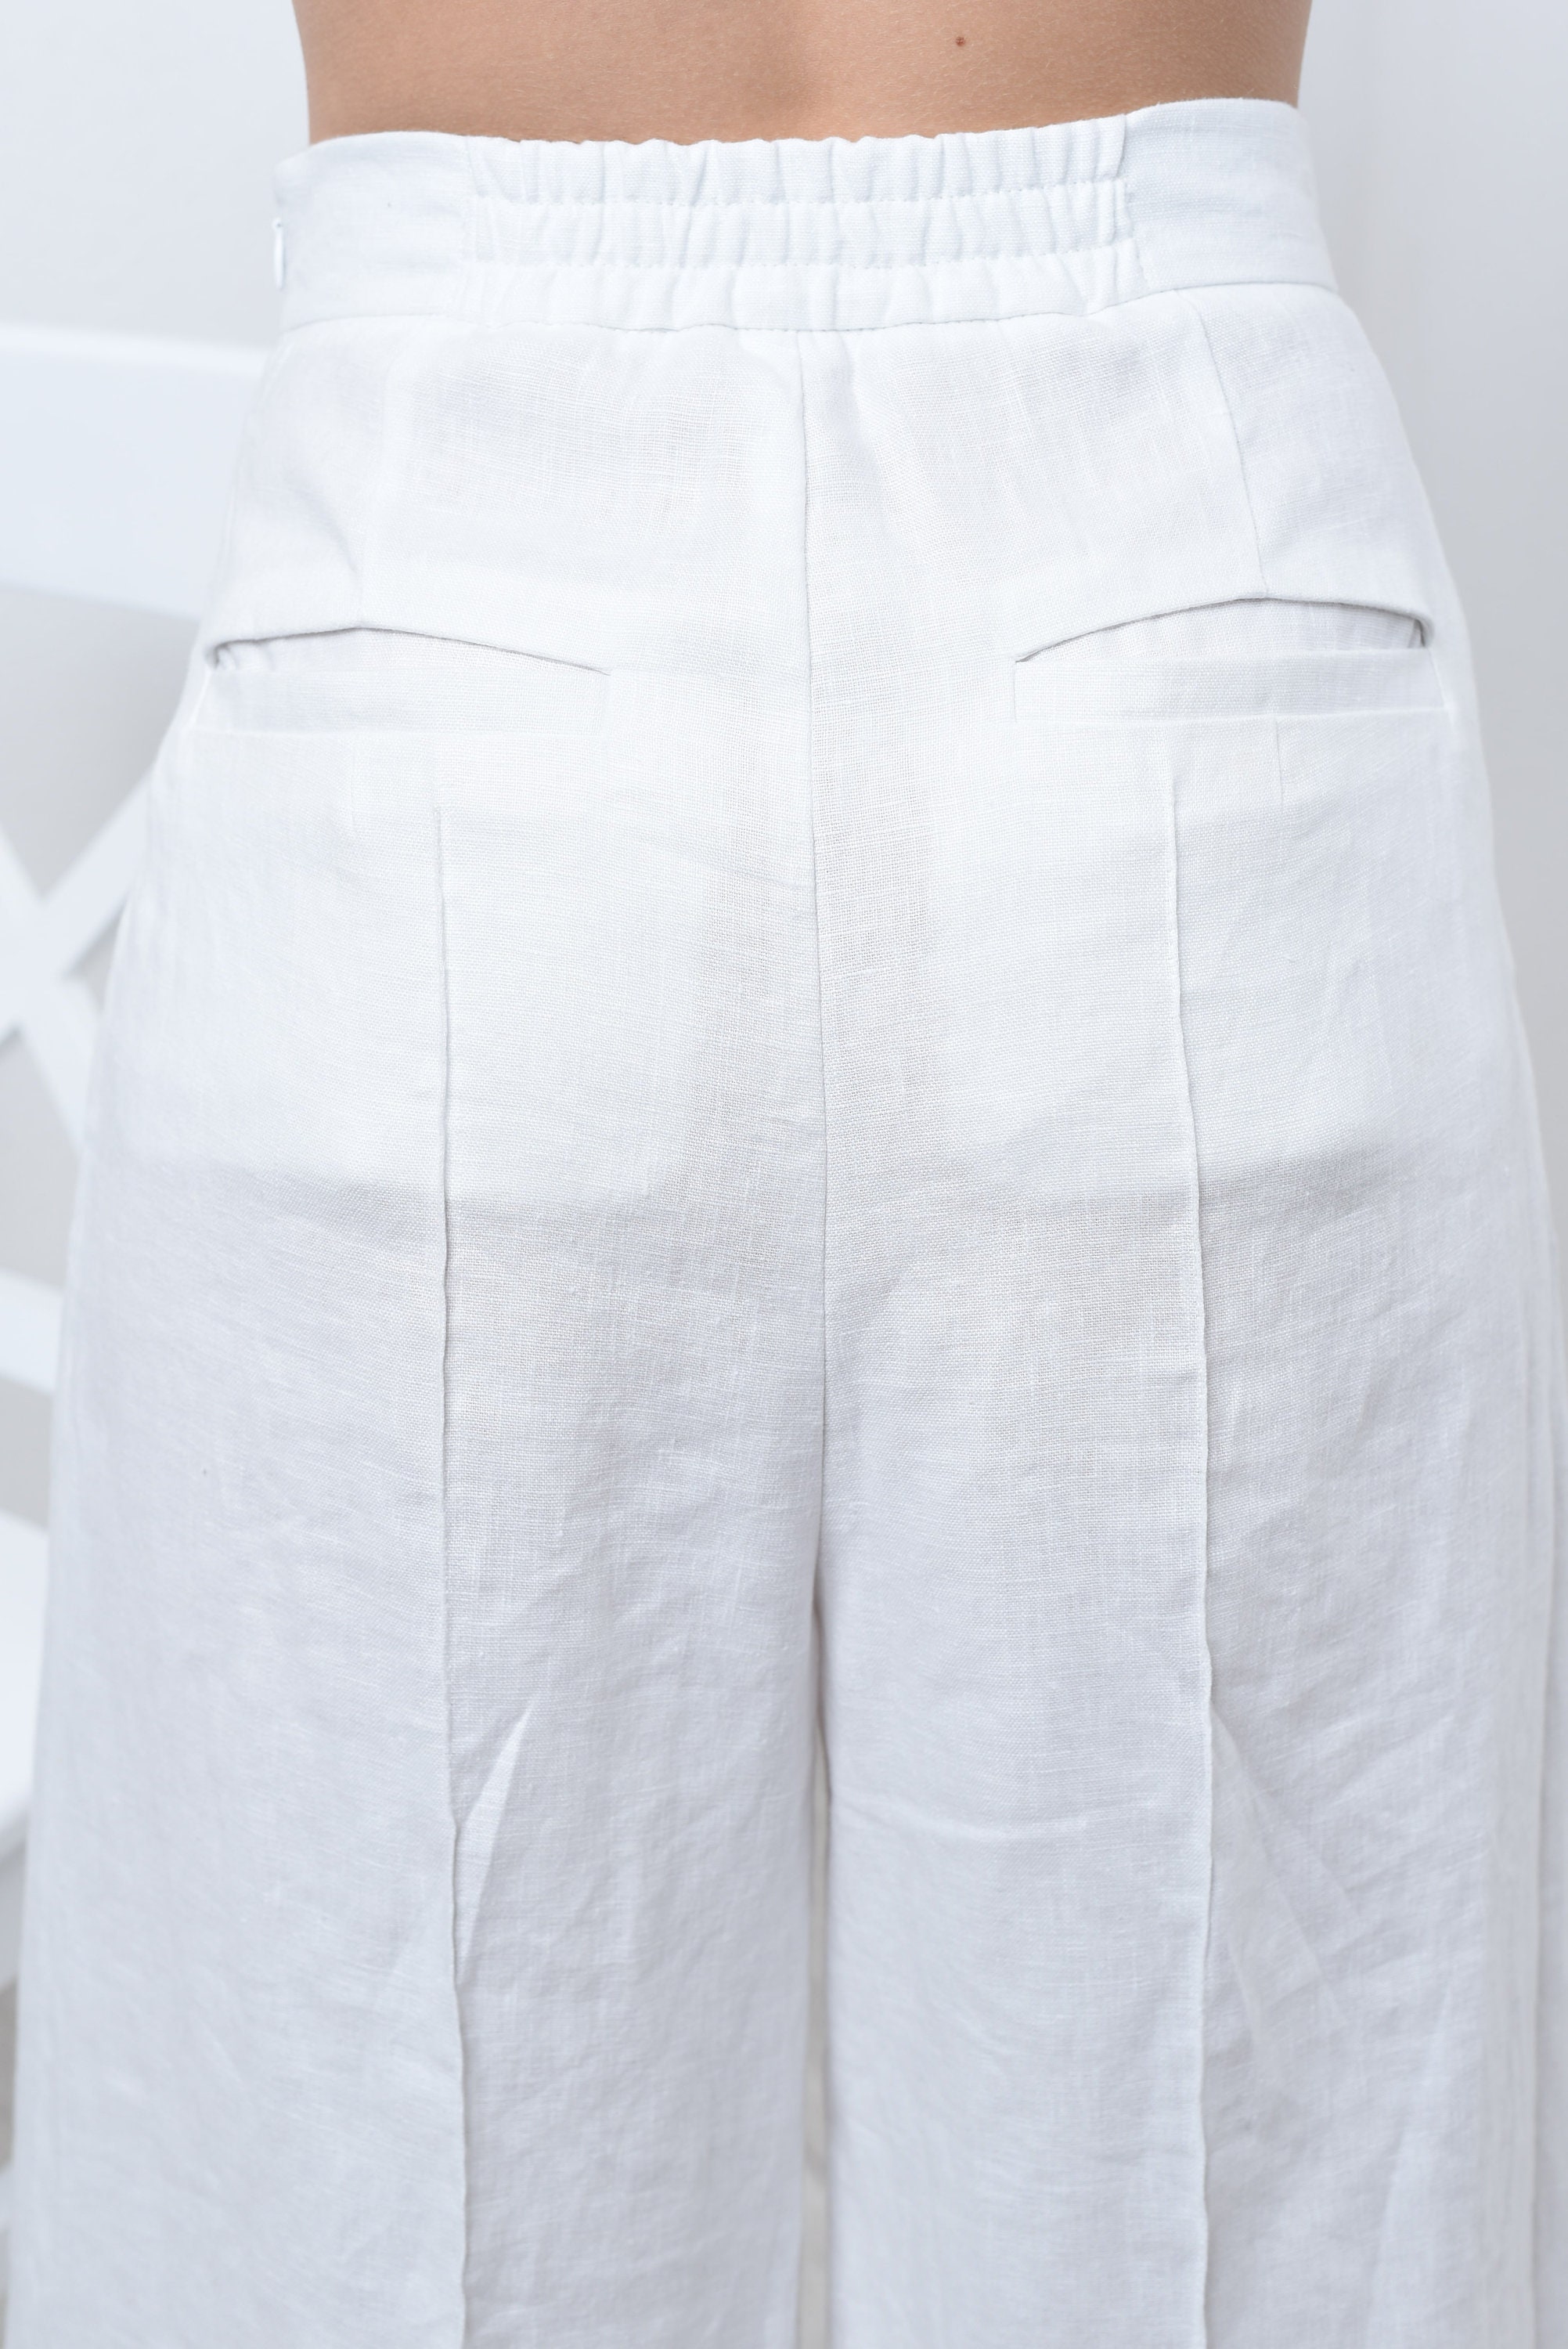 Linen Culottes or Full Length Pants for Women Wide Leg Pants - Etsy